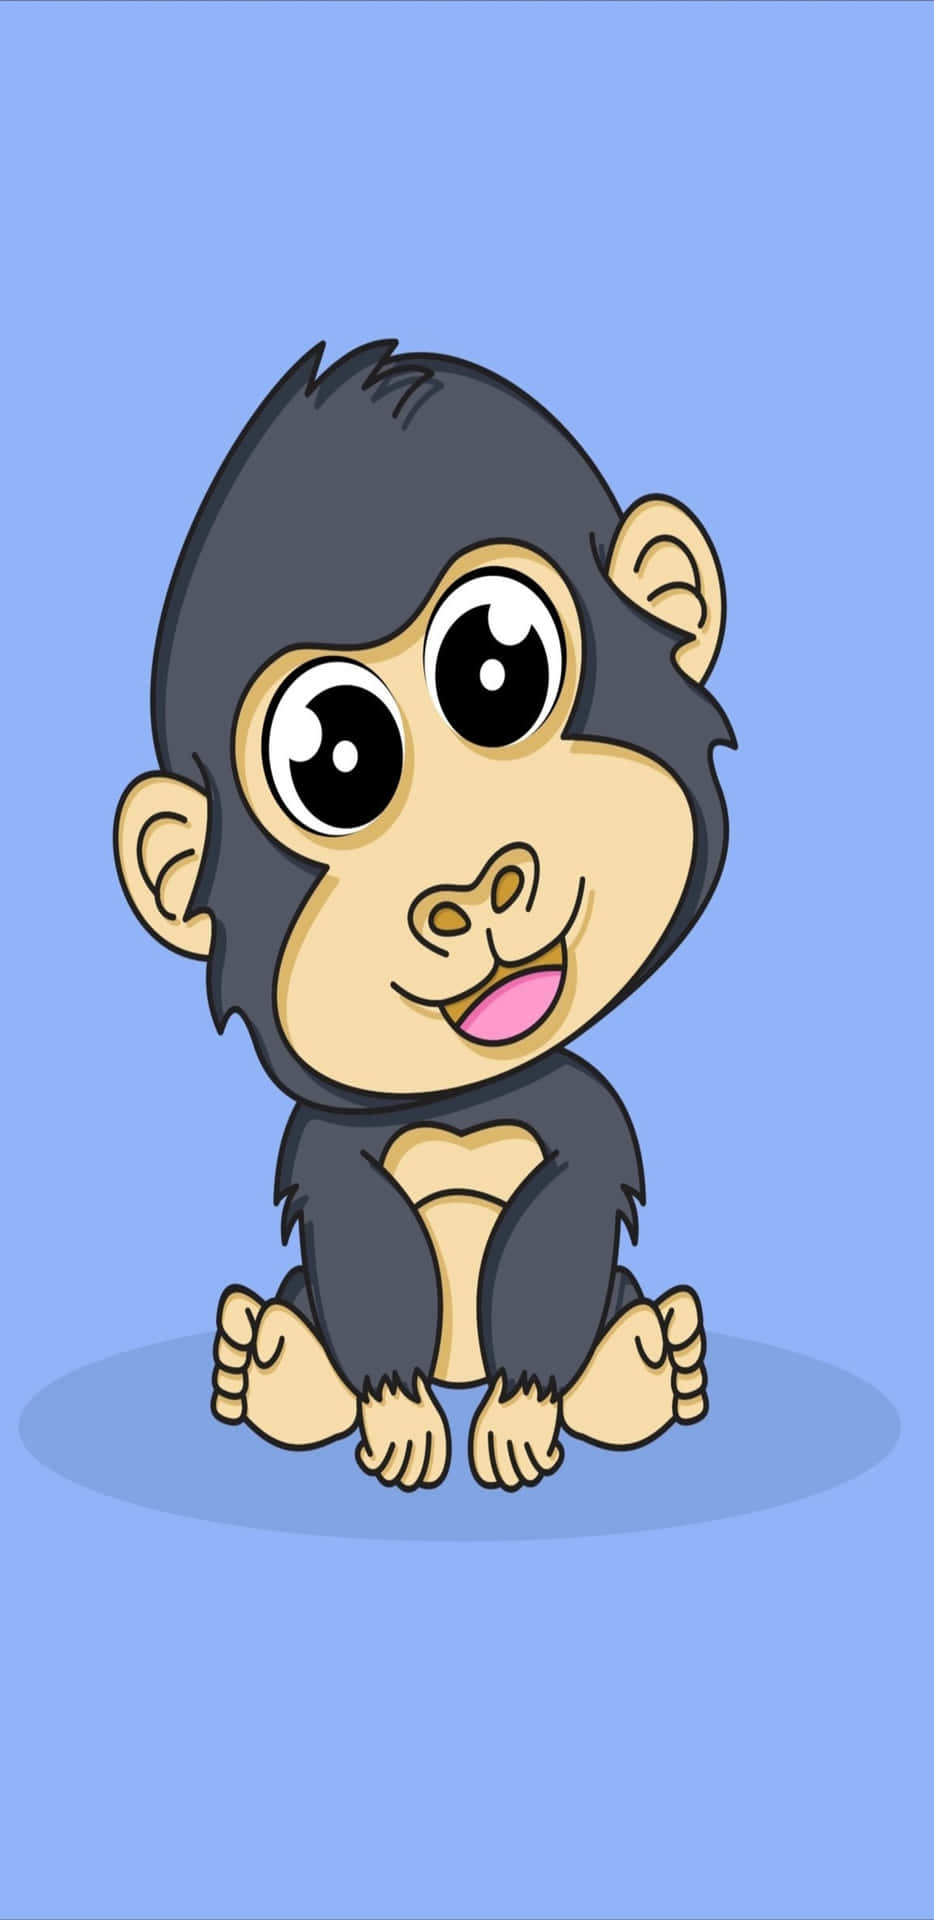 Cartoon Pixel 3 XL Gorilla Background Vector Art